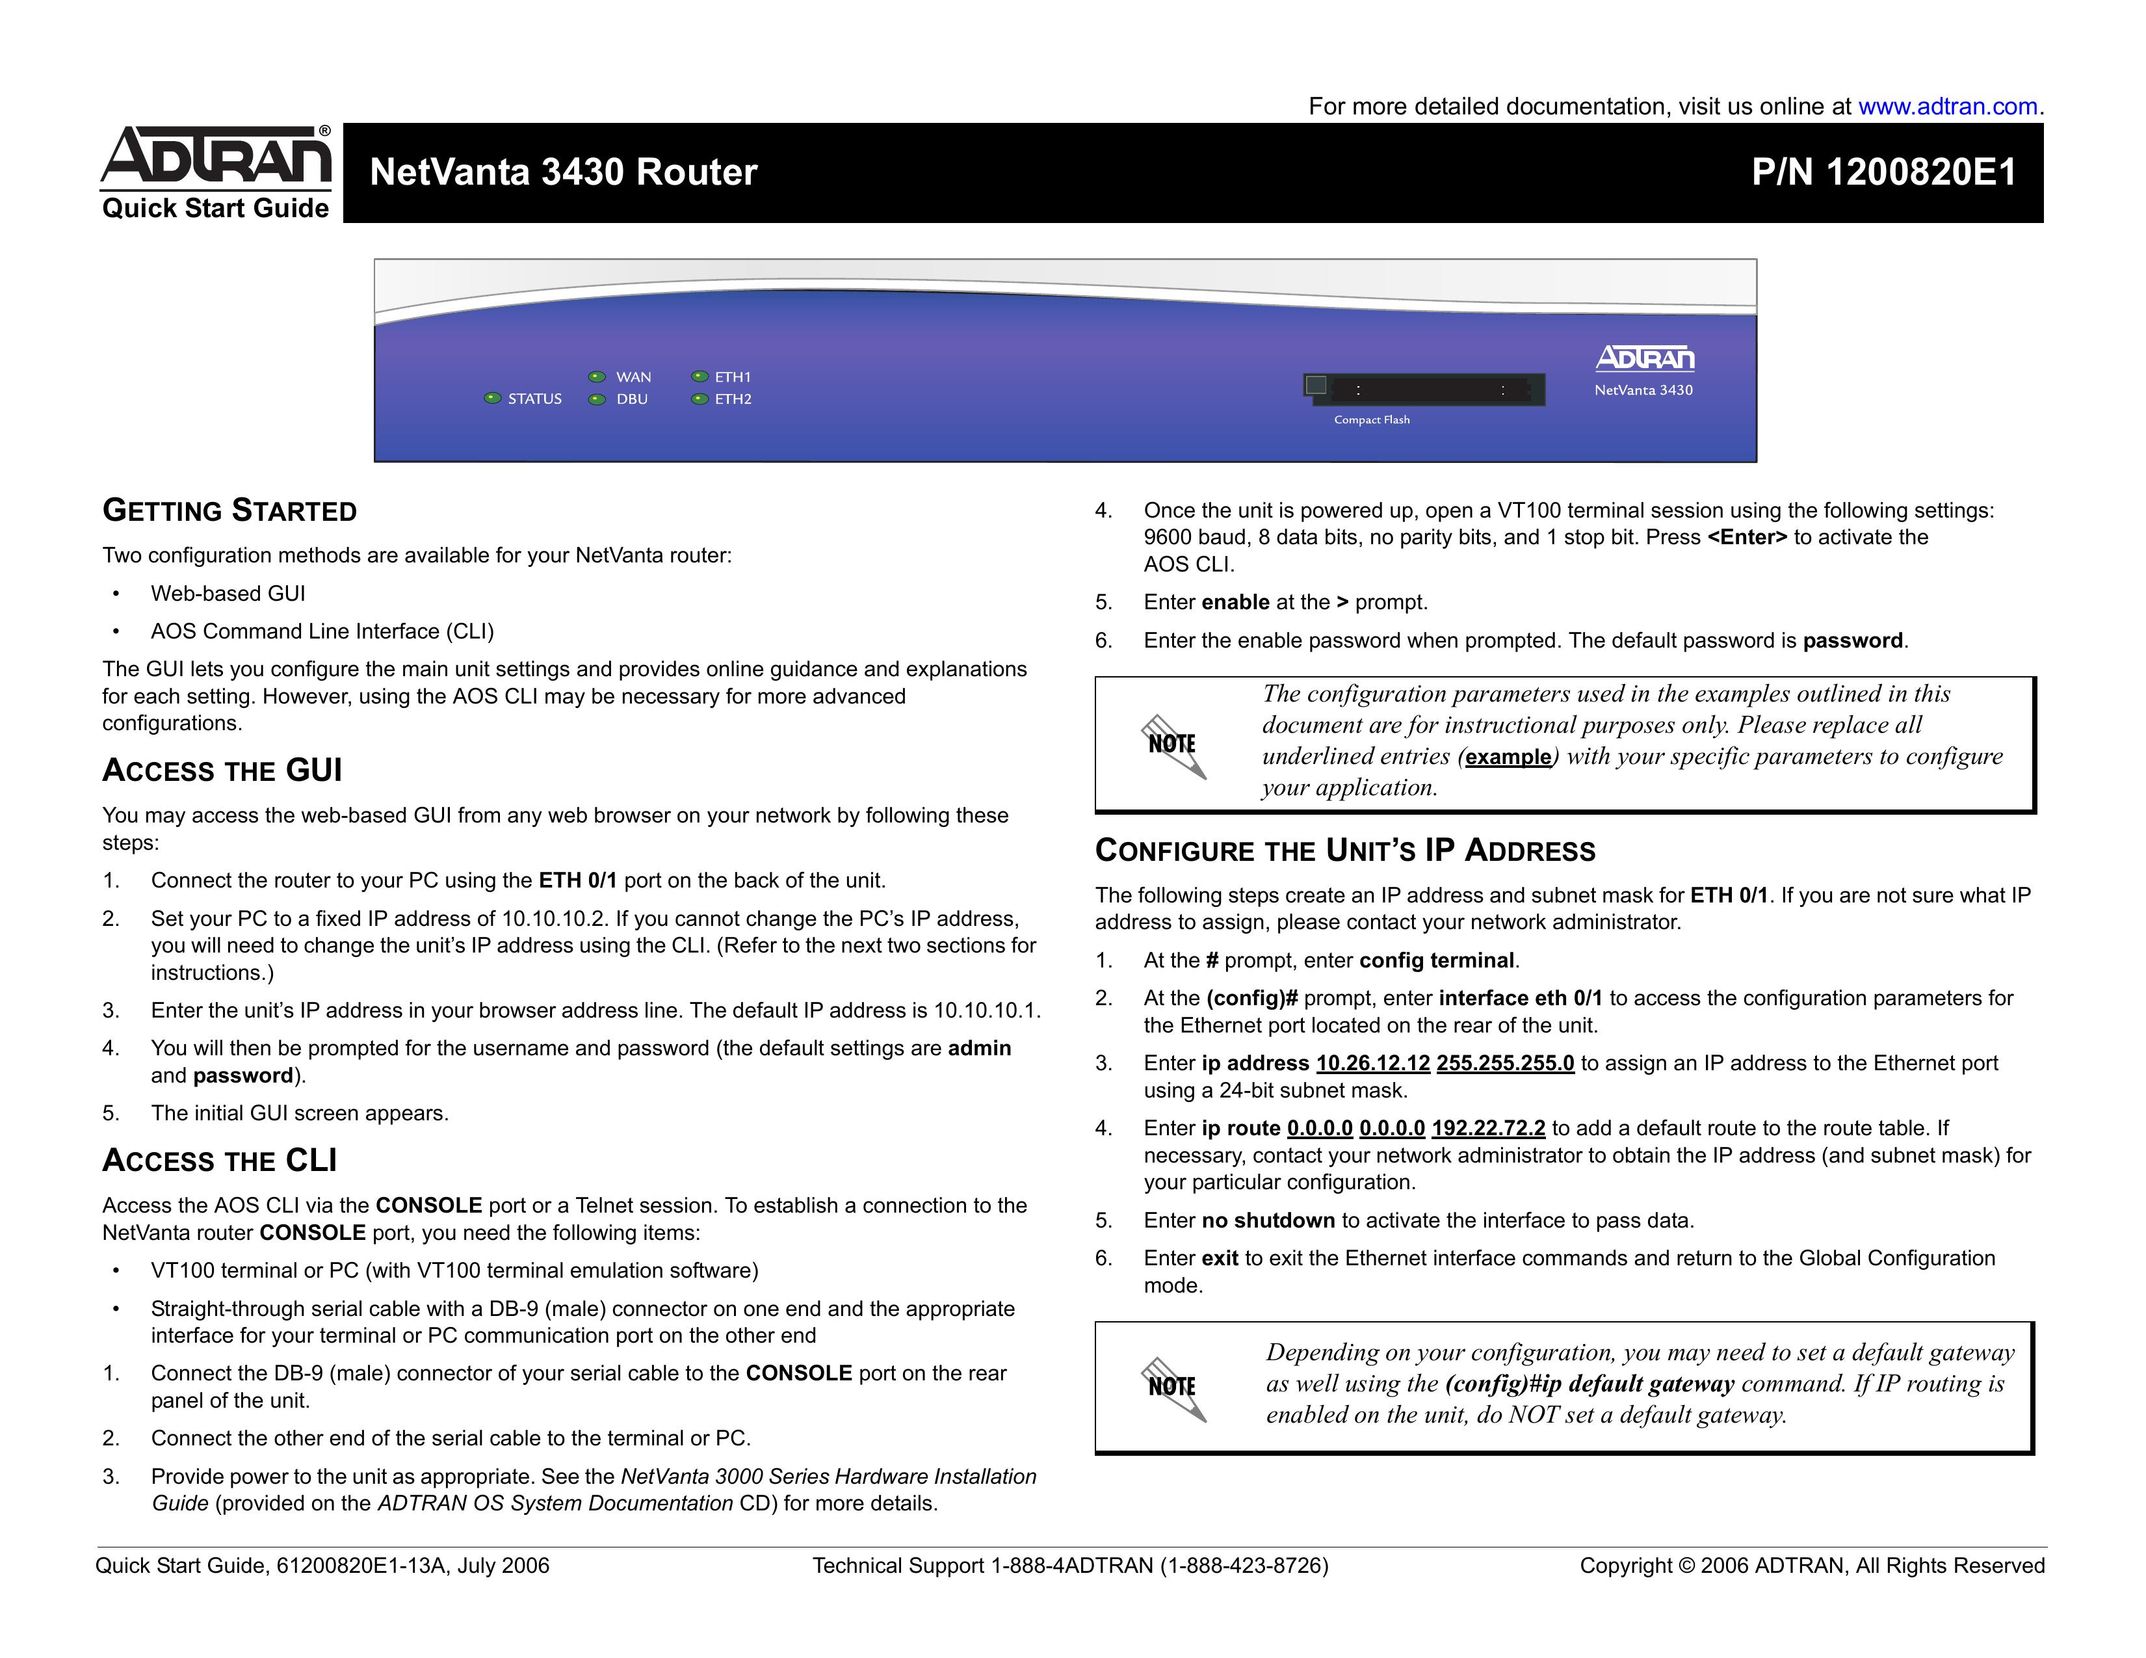 ADTRAN 3430 Network Router User Manual